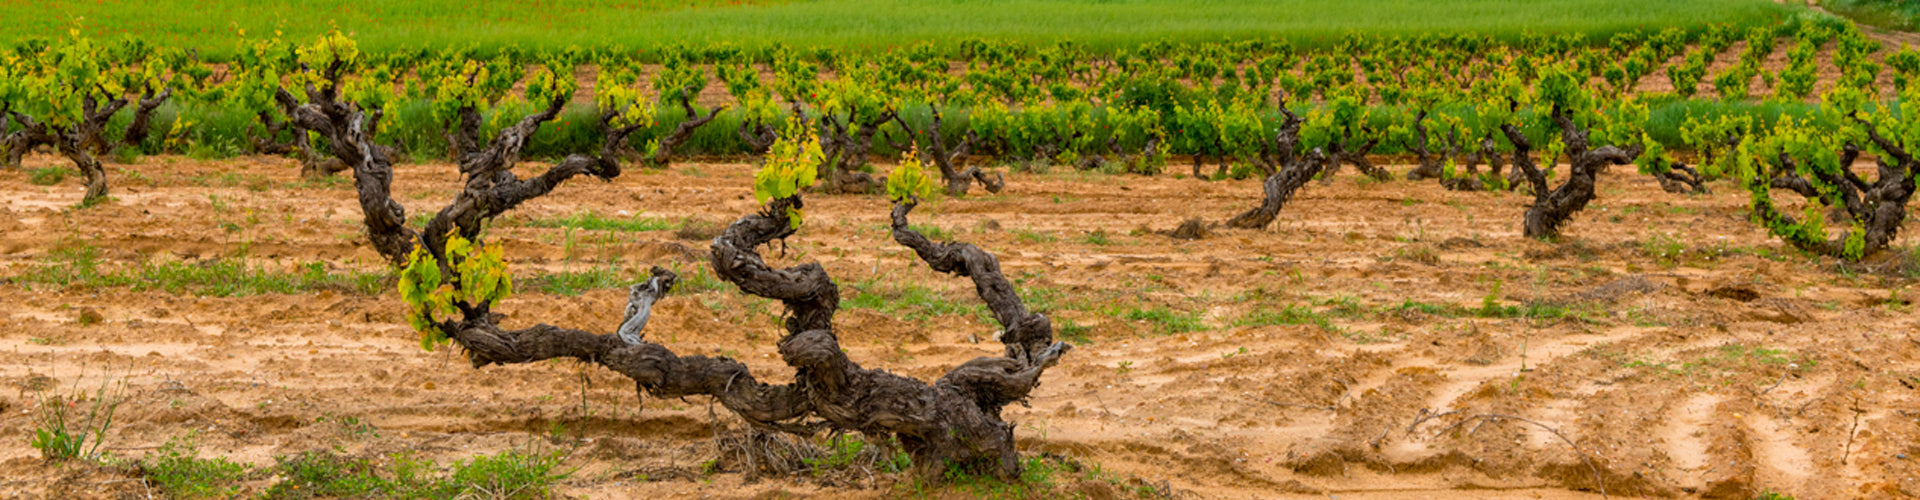 Old Bush Vineyards of Dominio del Águila in Ribera del Duero